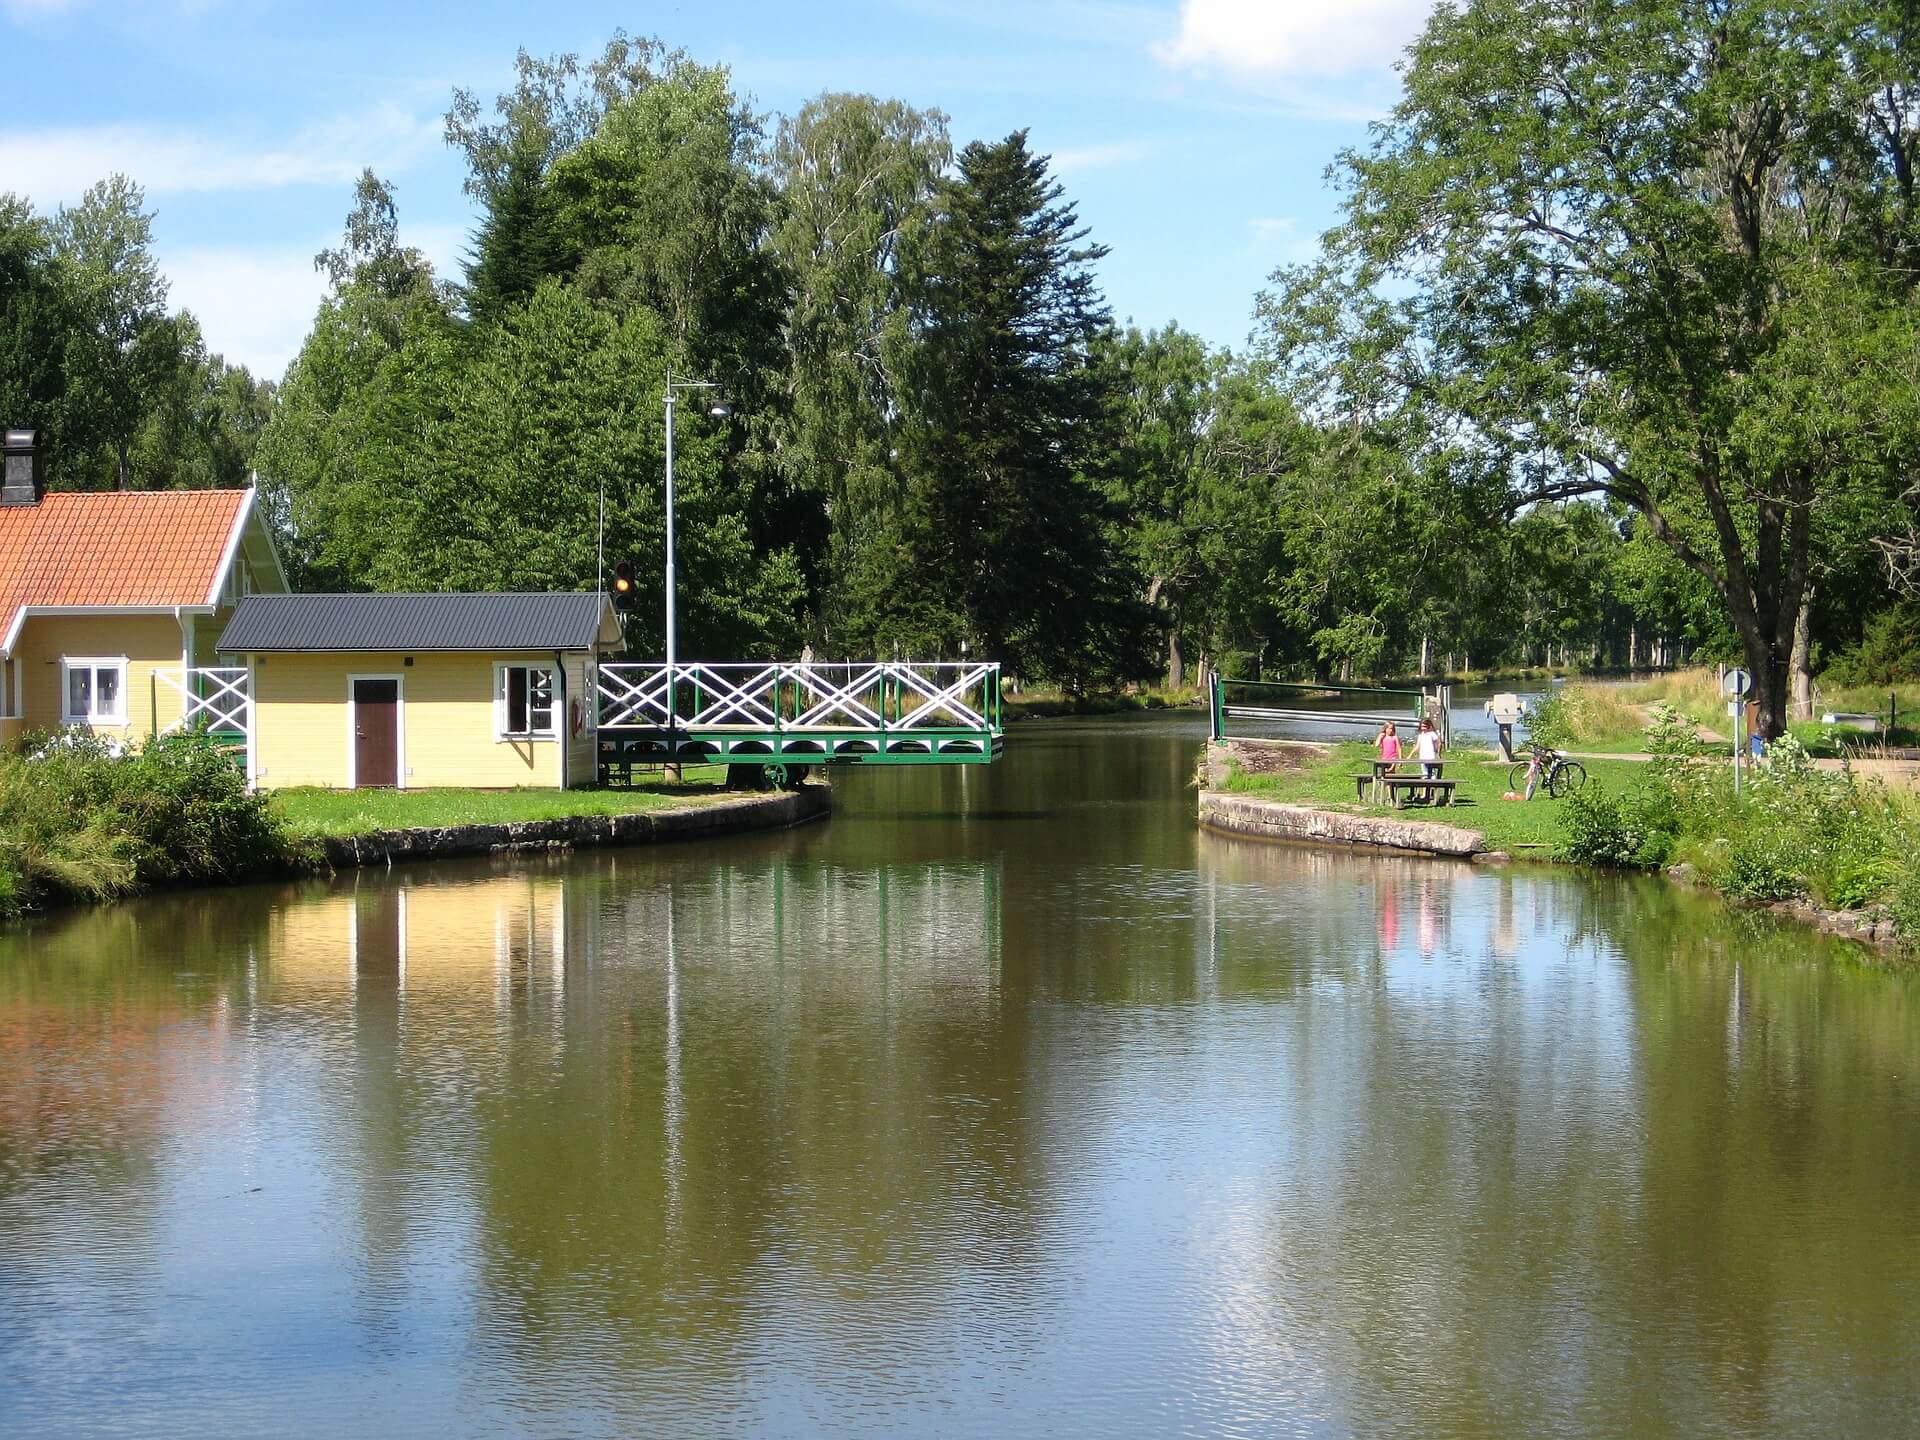 Göta Canal: Bicycle